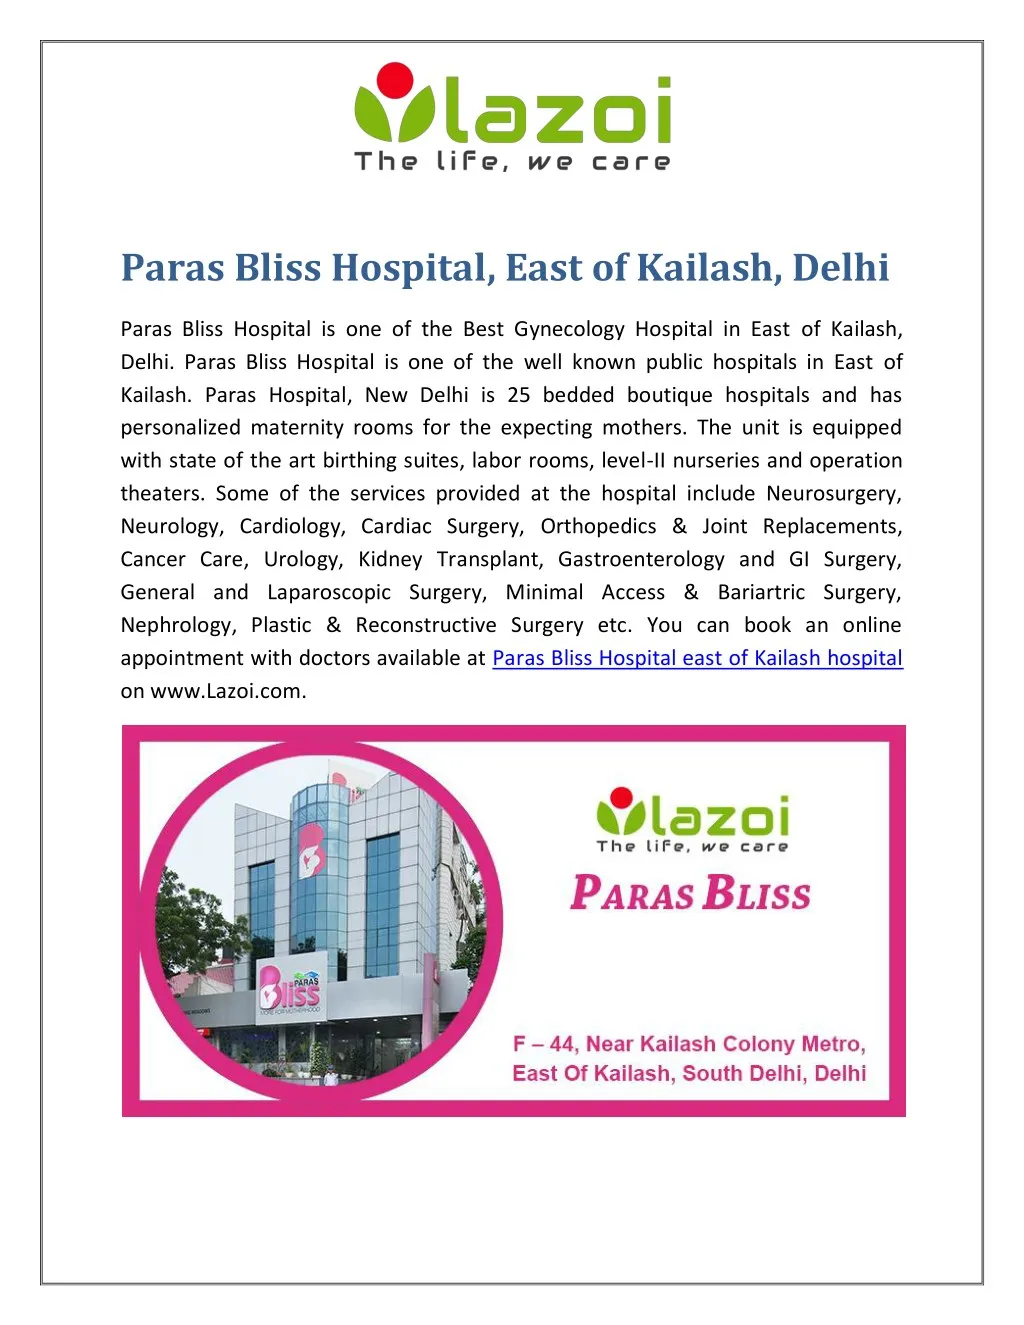 paras bliss hospital east of kailash delhi